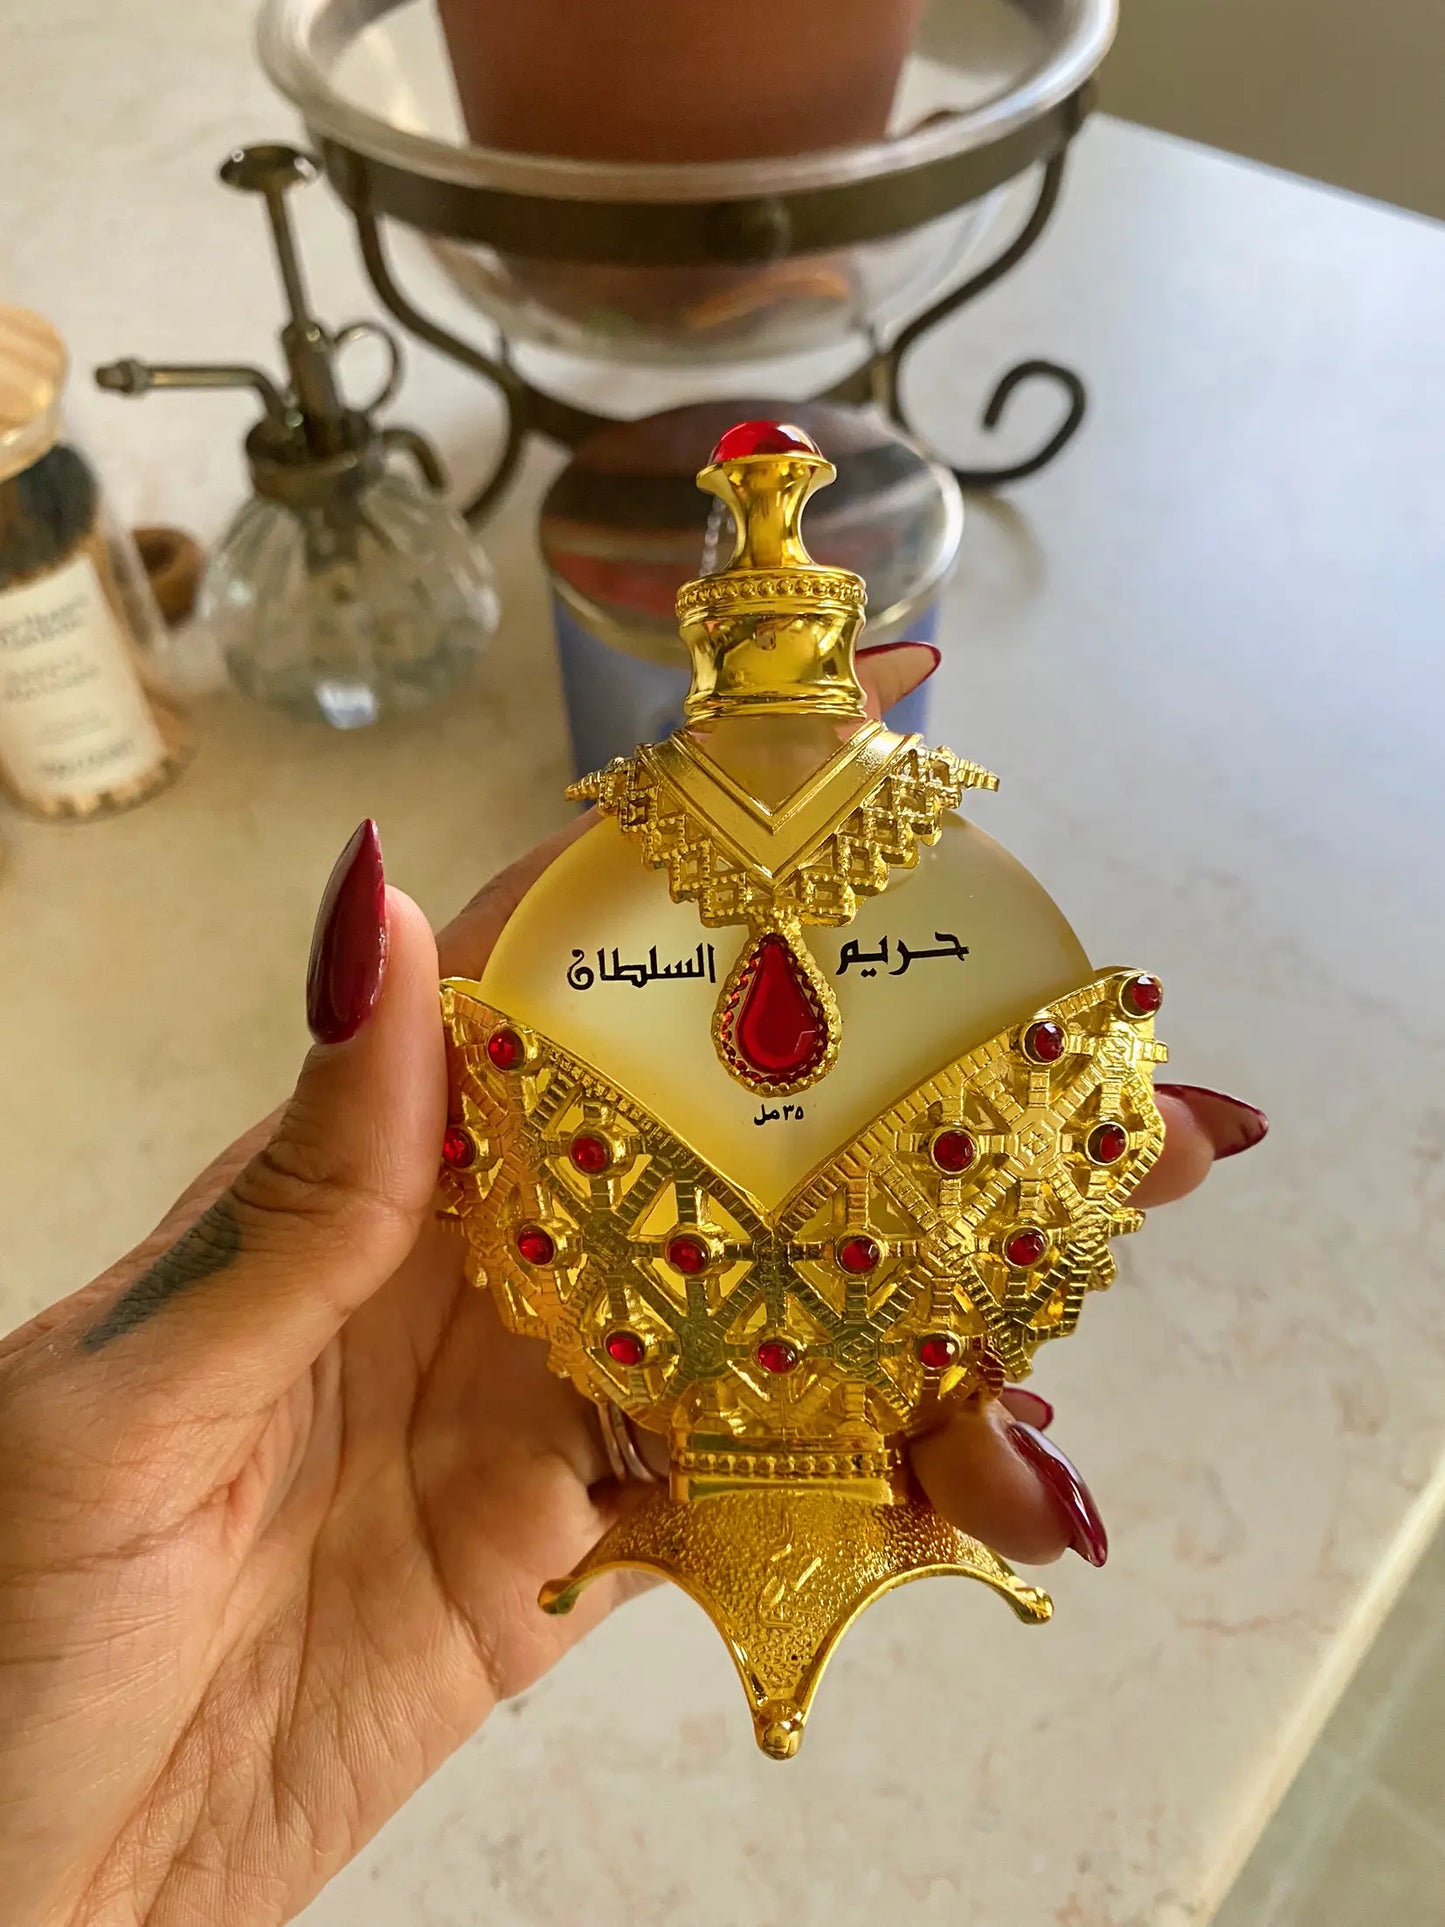 KHADLAJ PERFUMES Hareem Al Sultan Gold Concentrated Perfume Oil for - Unisex